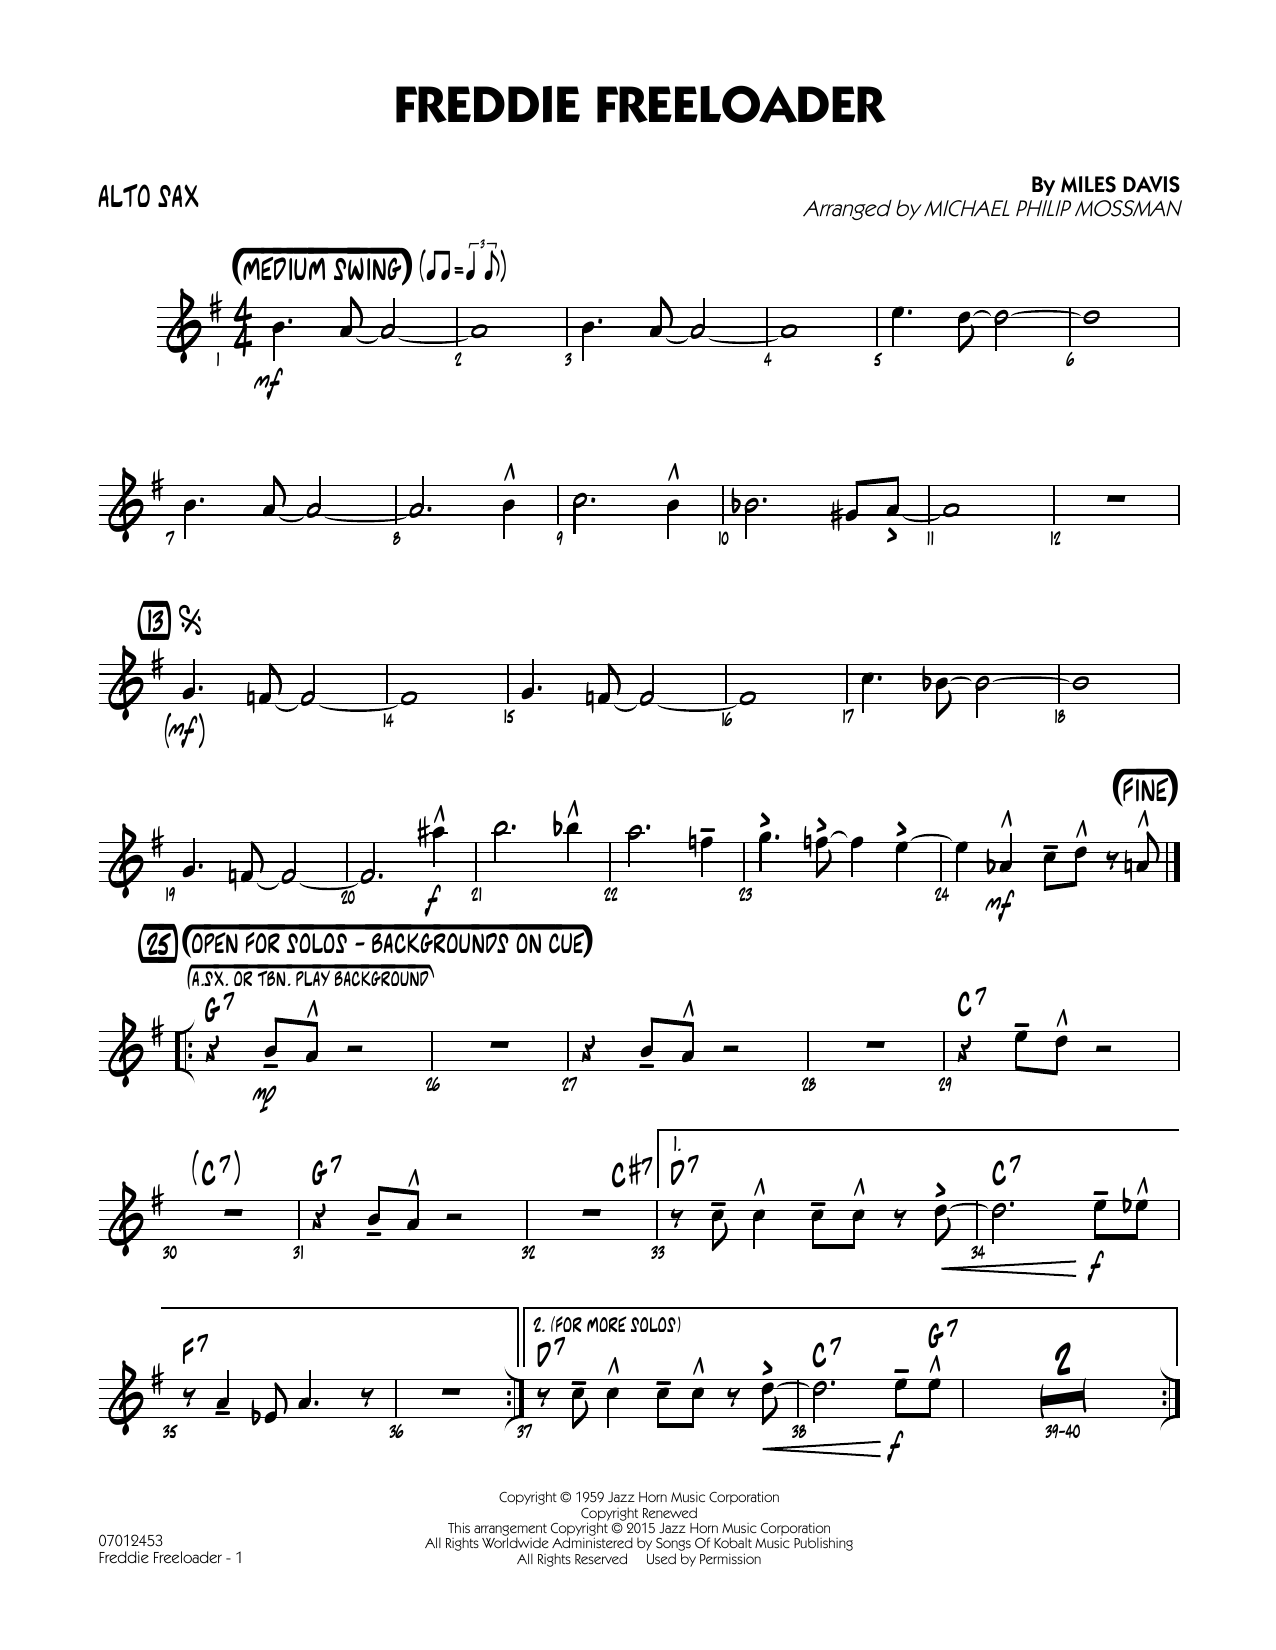 Michael Philip Mossman Freddie Freeloader - Alto Sax sheet music notes and chords. Download Printable PDF.